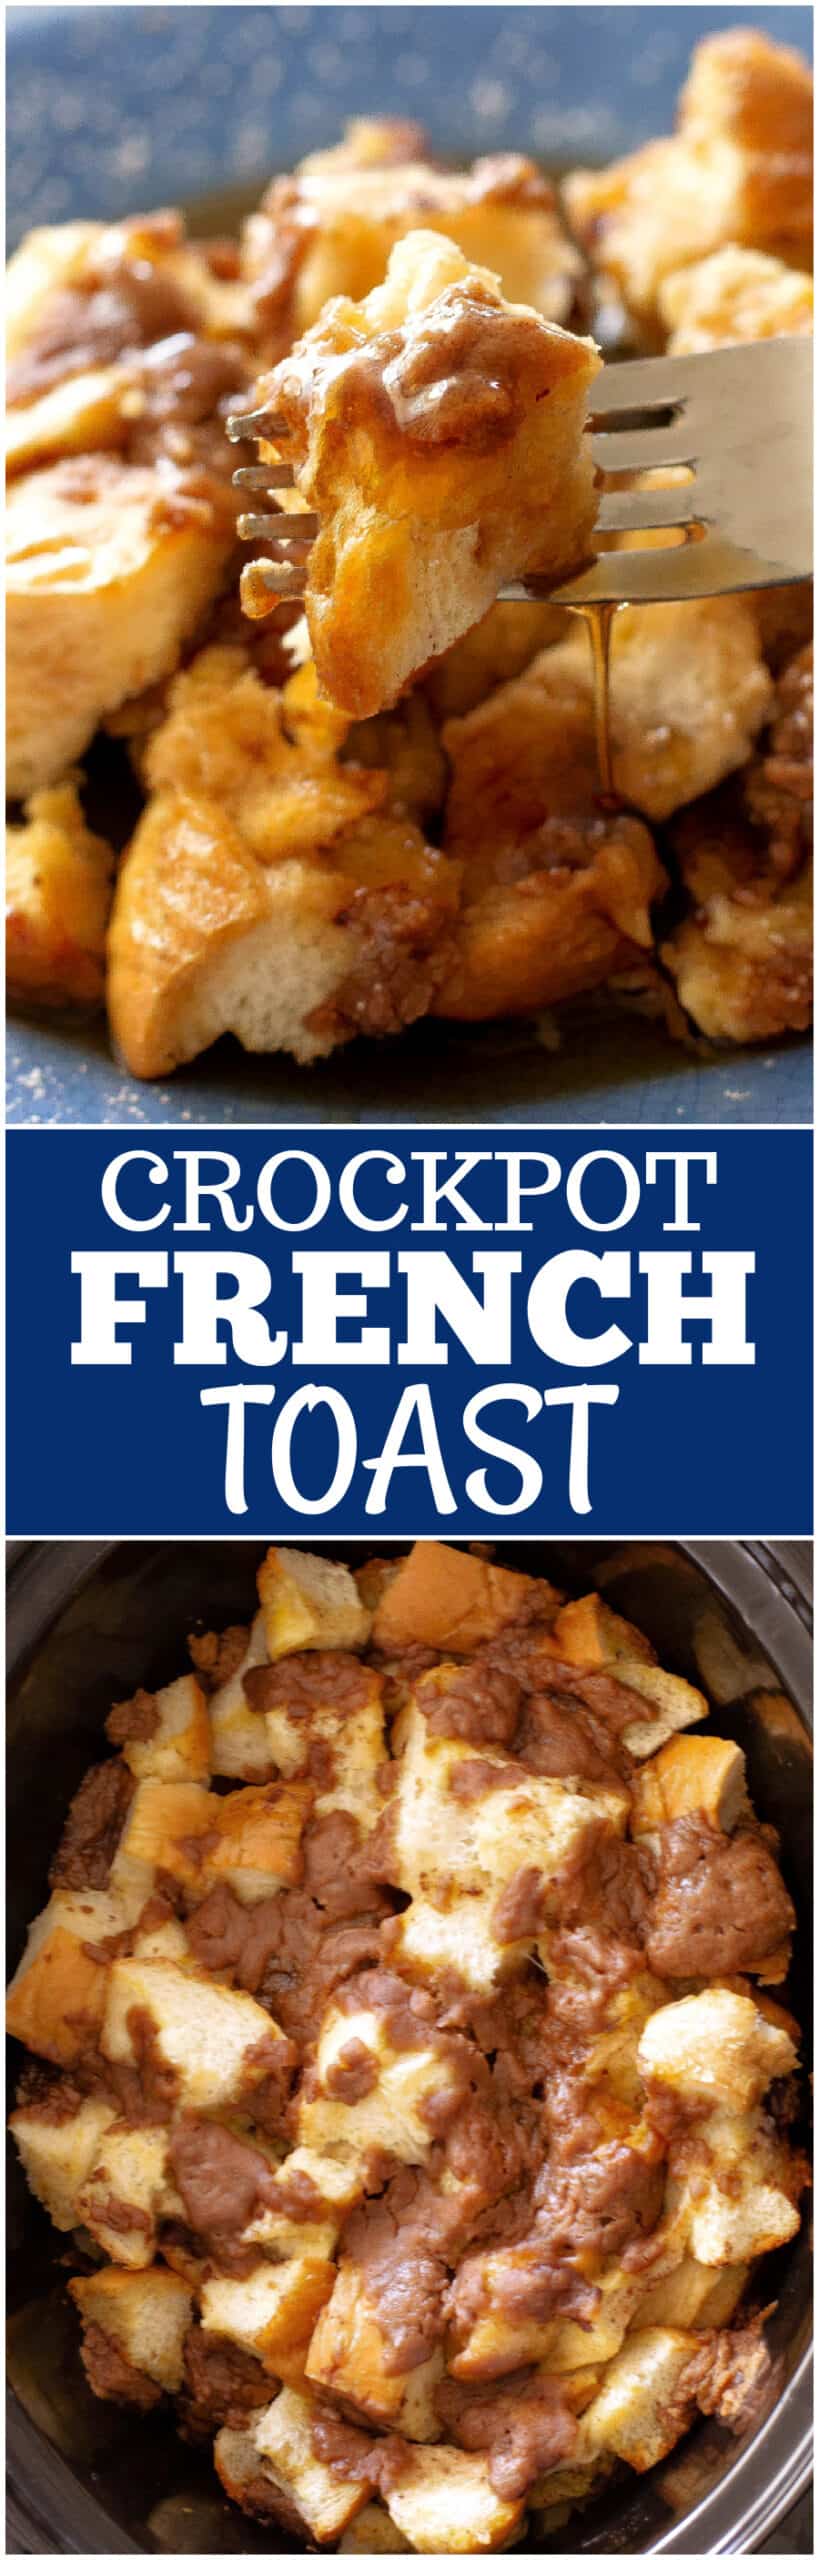 crockpot french toast scaled - Crockpot French Toast